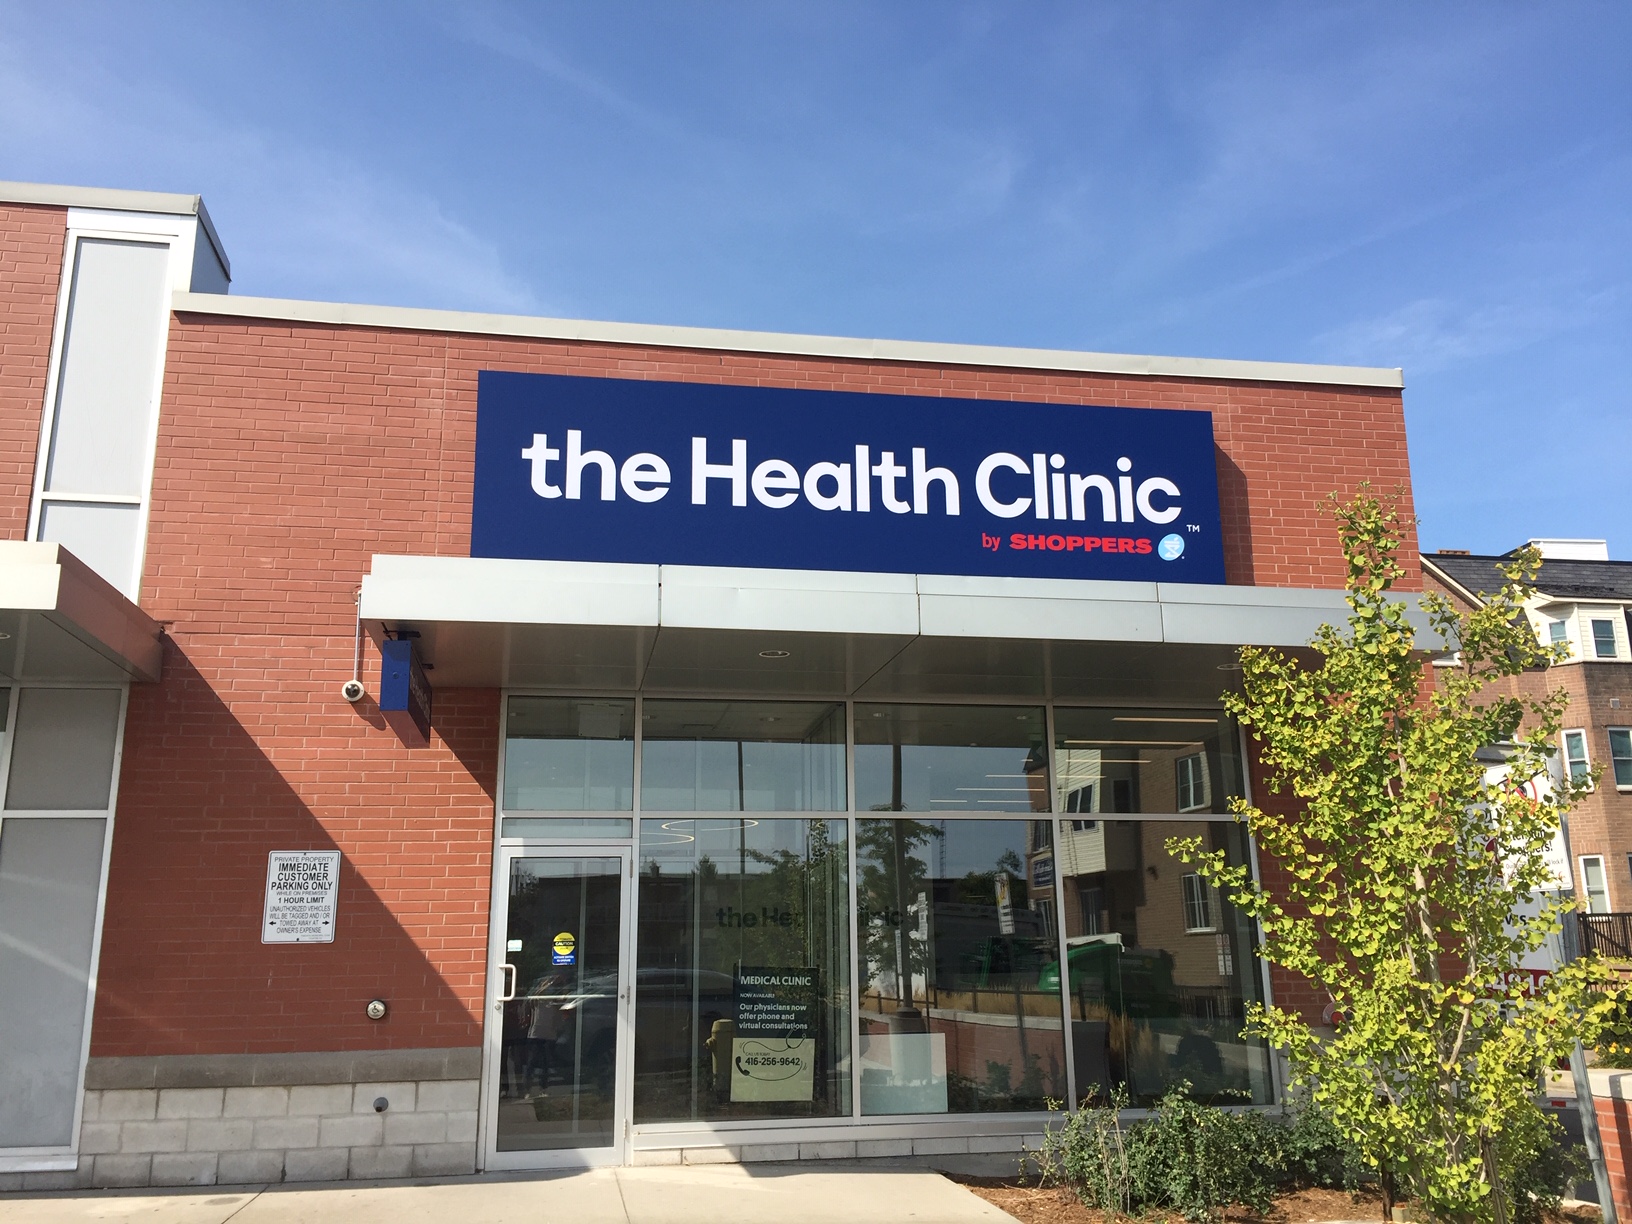 the Health Clinic